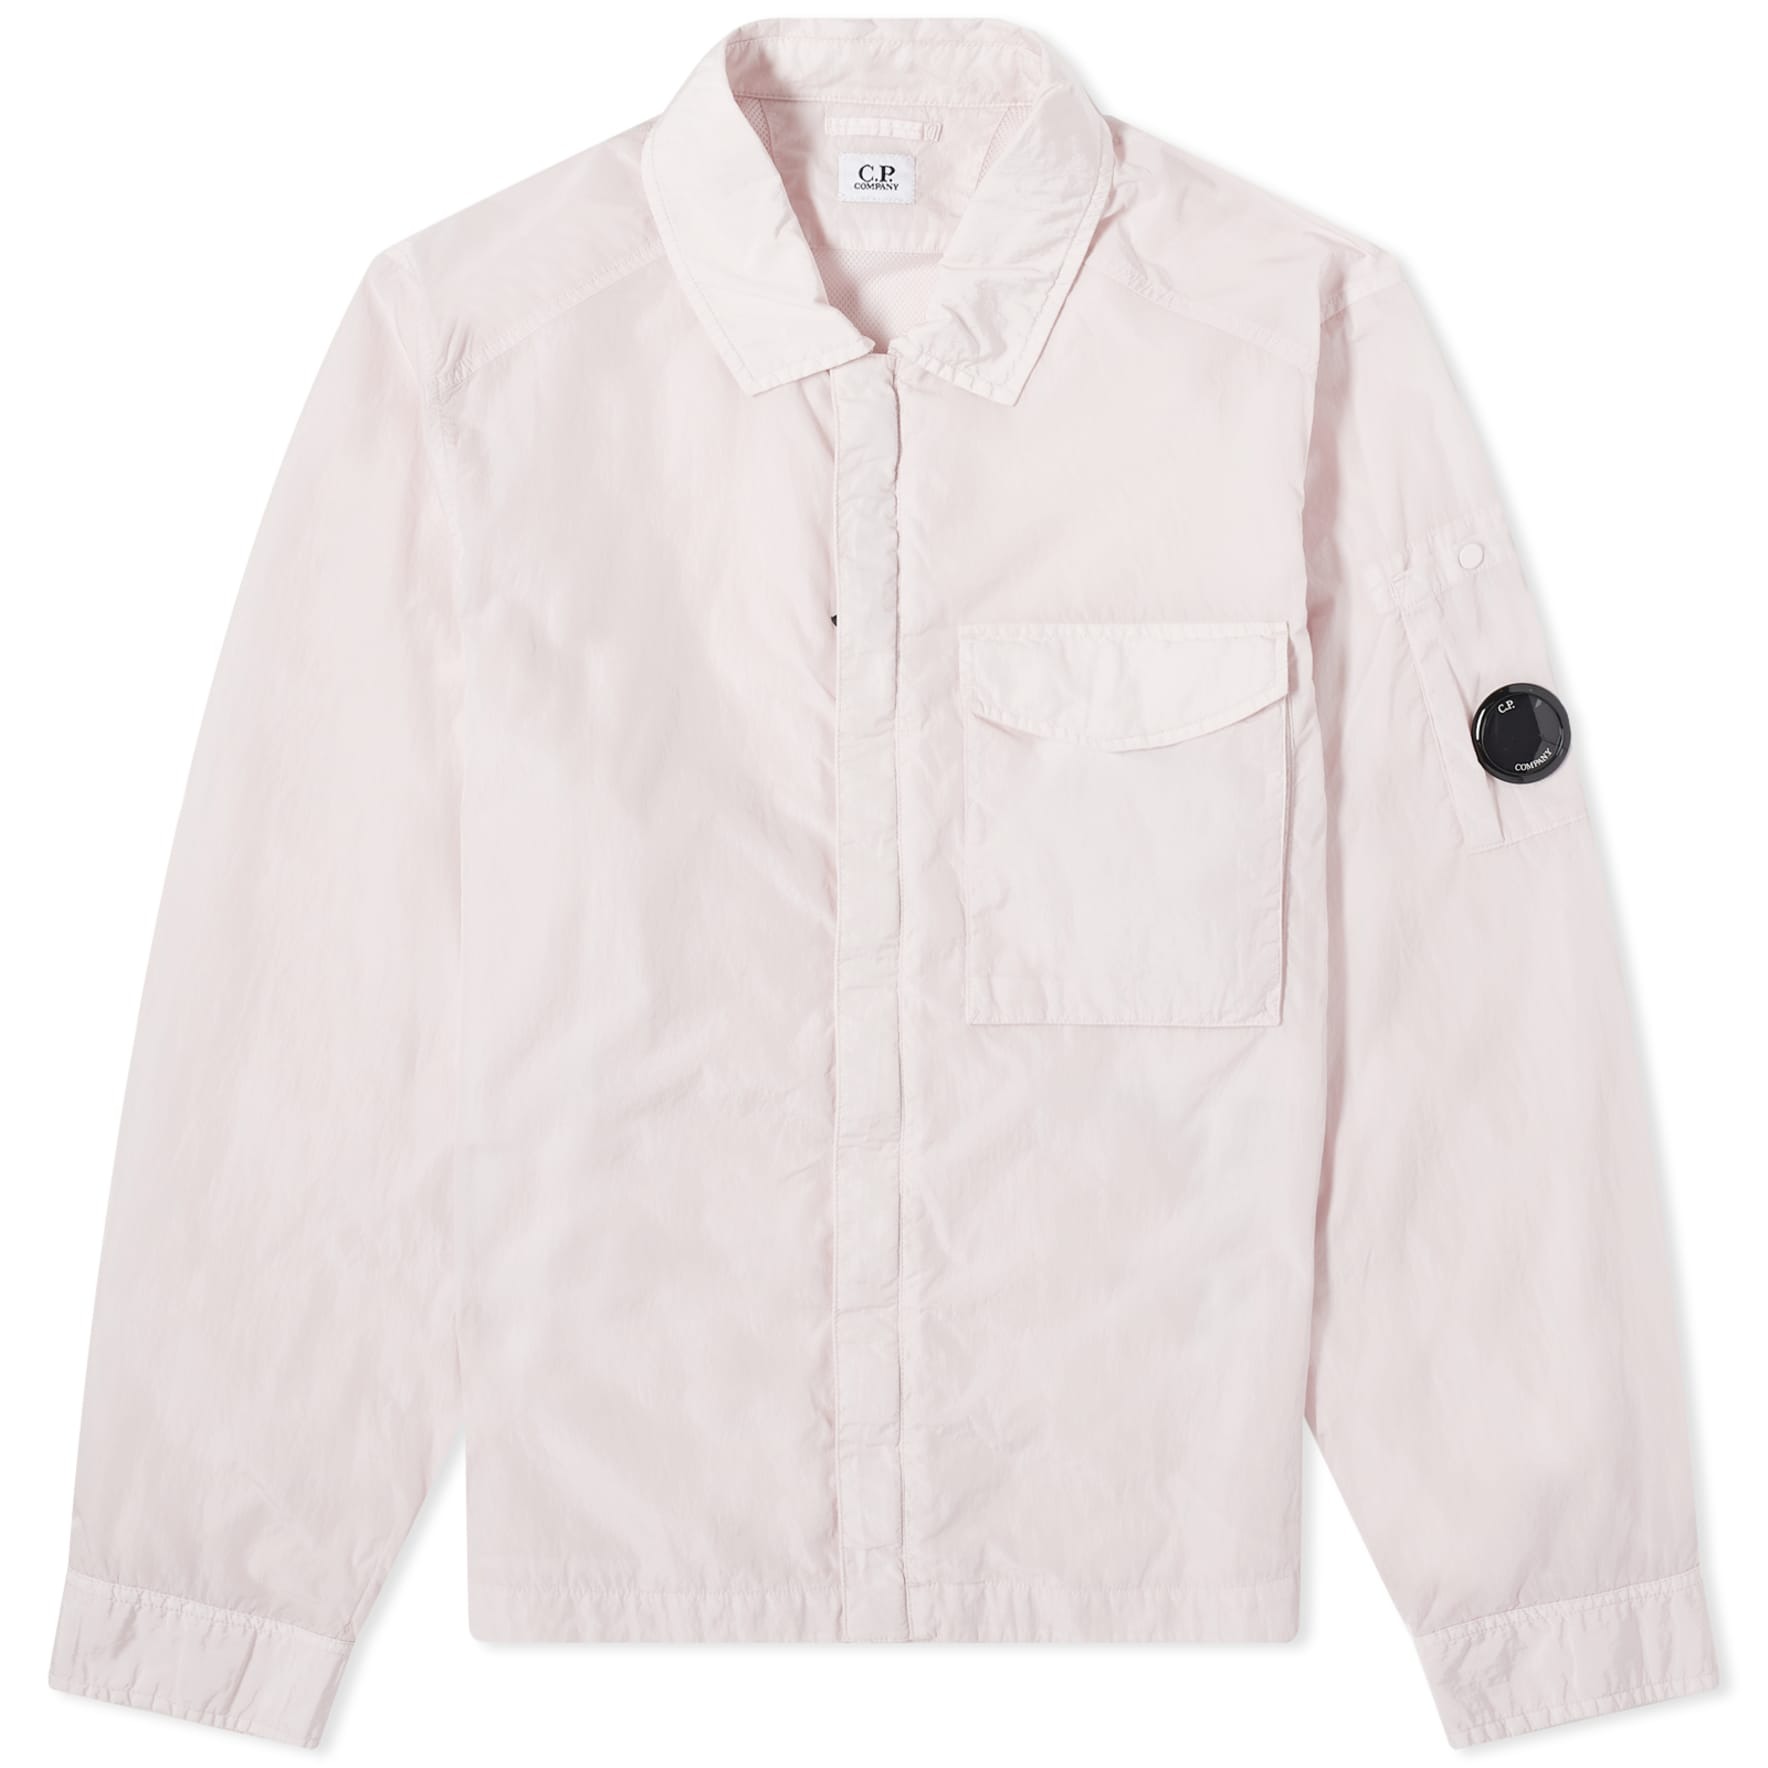 Куртка-рубашка C.P. Company Chrome-R Pocket, бледно-розовый куртка рубашка c p company chrome r pocket голубой